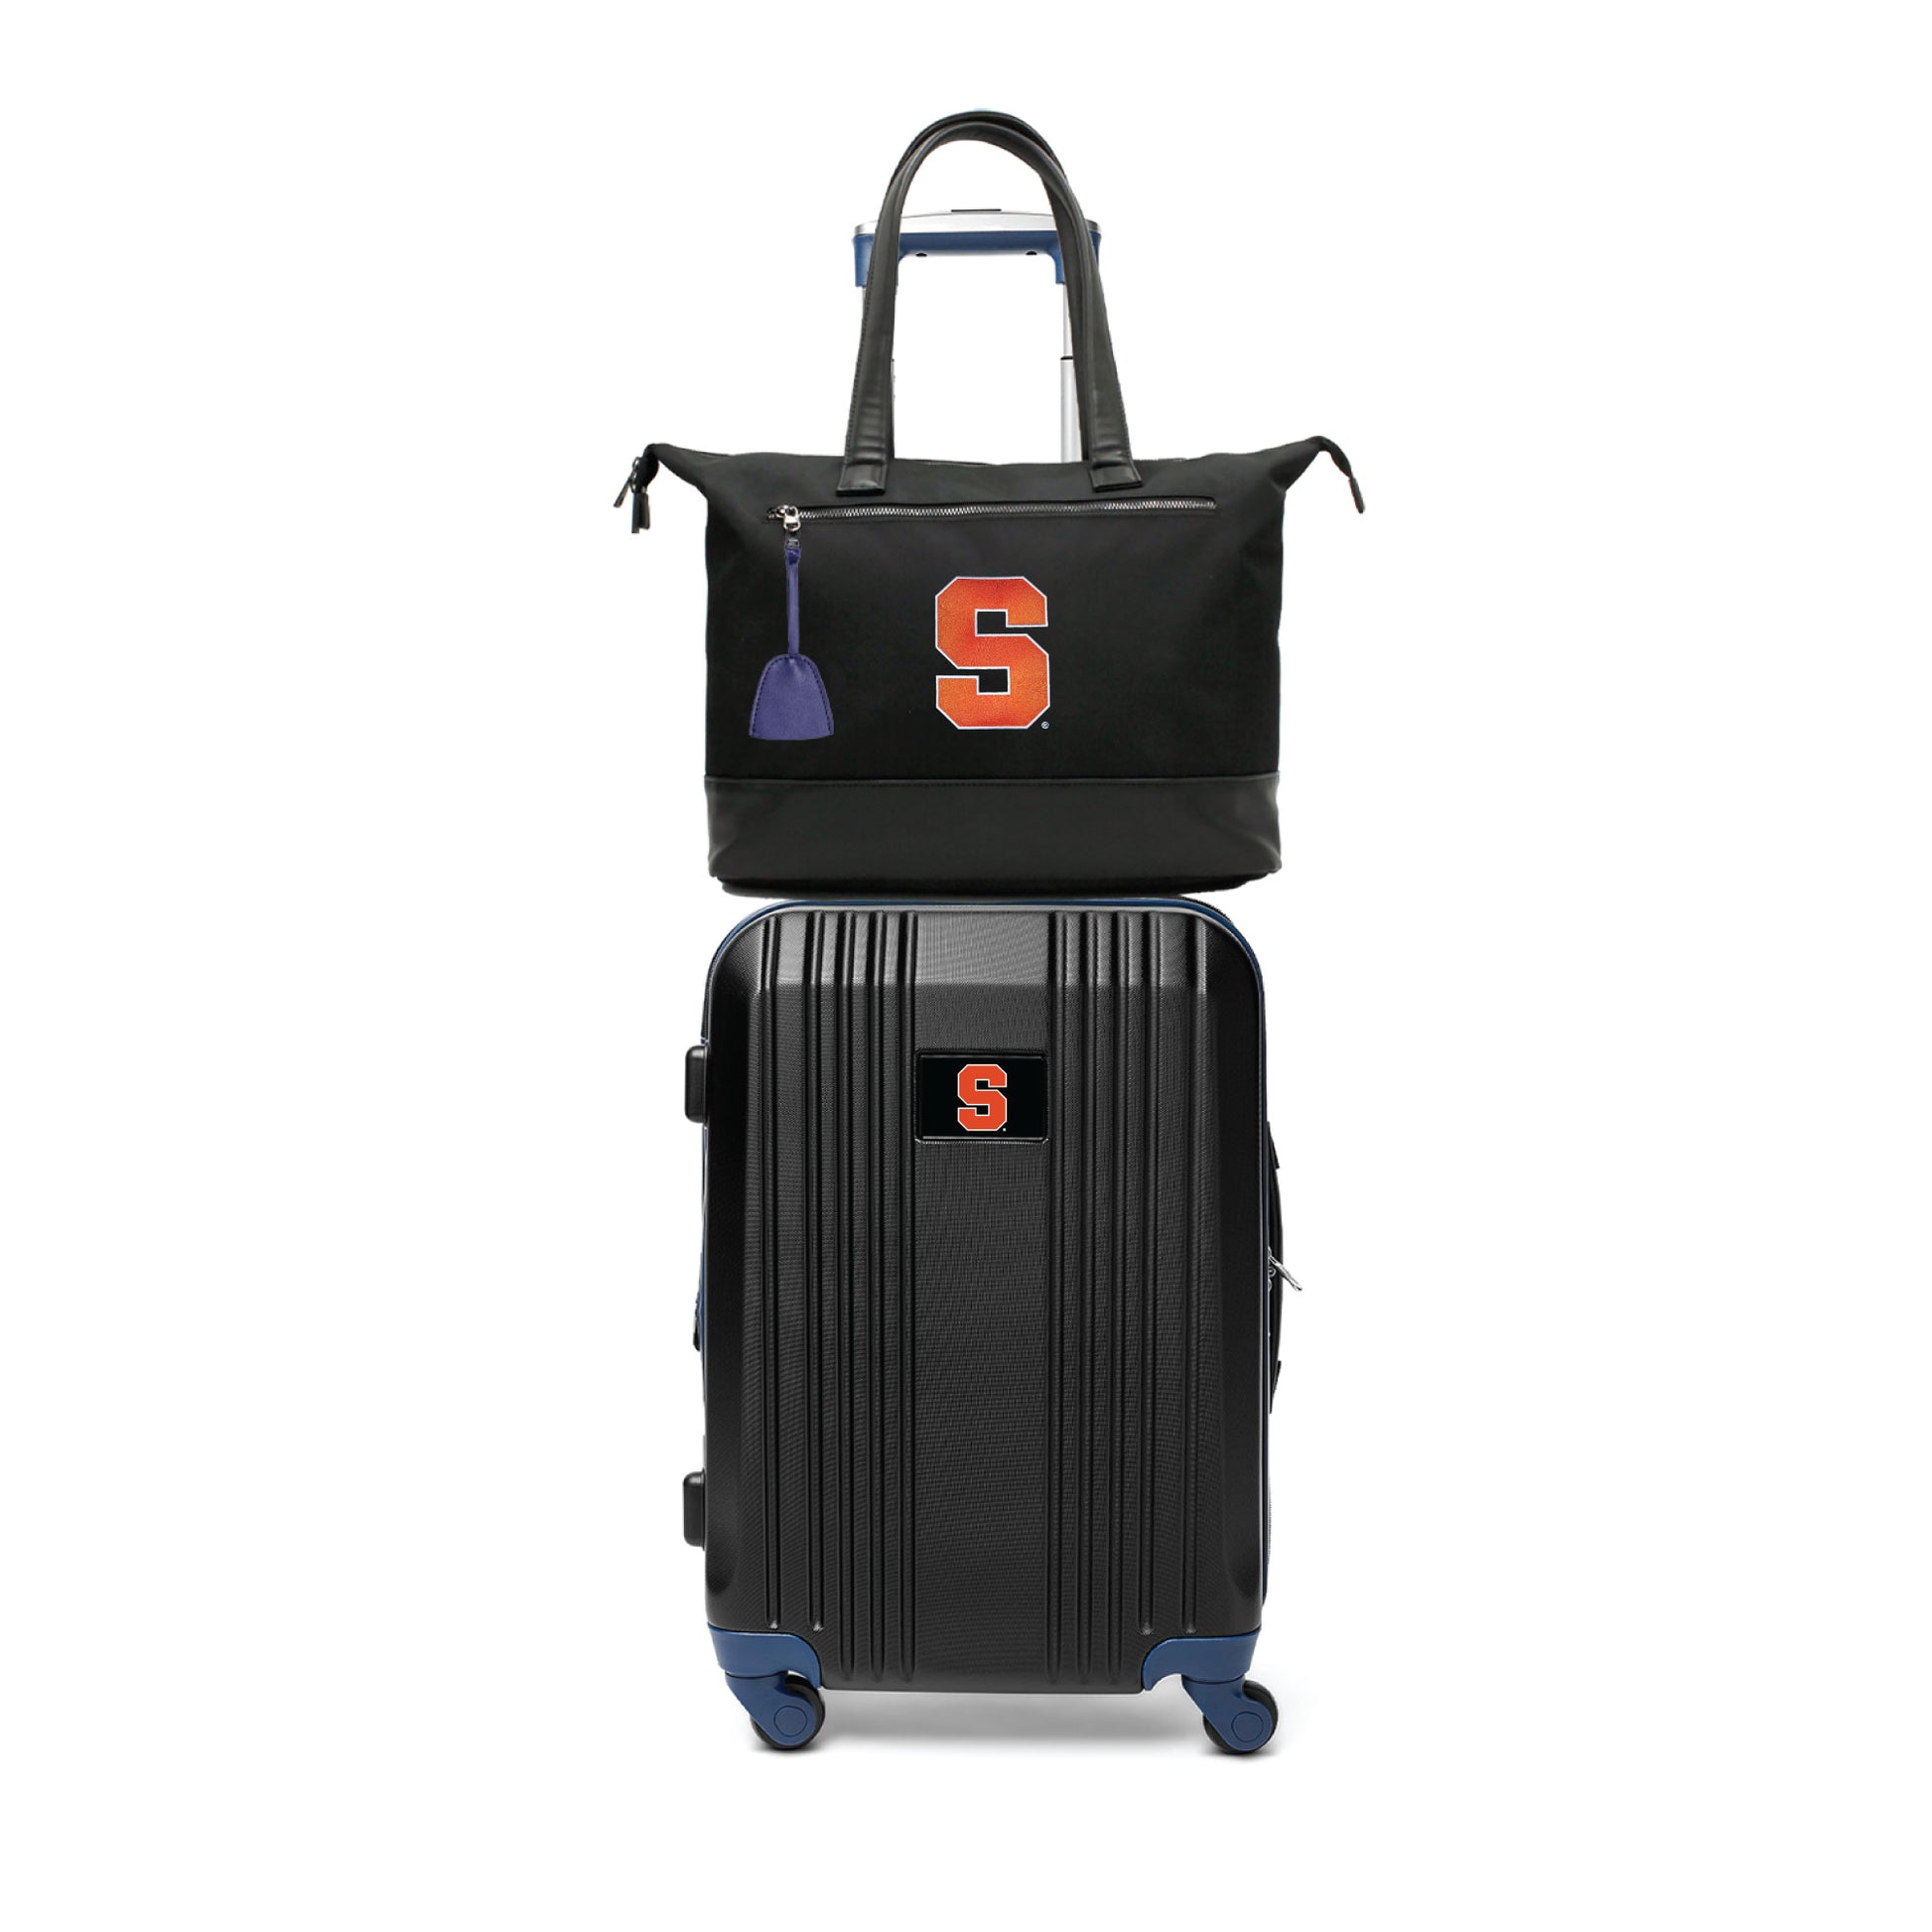 Syracuse Orangemen Premium Laptop Tote Bag and Luggage Set